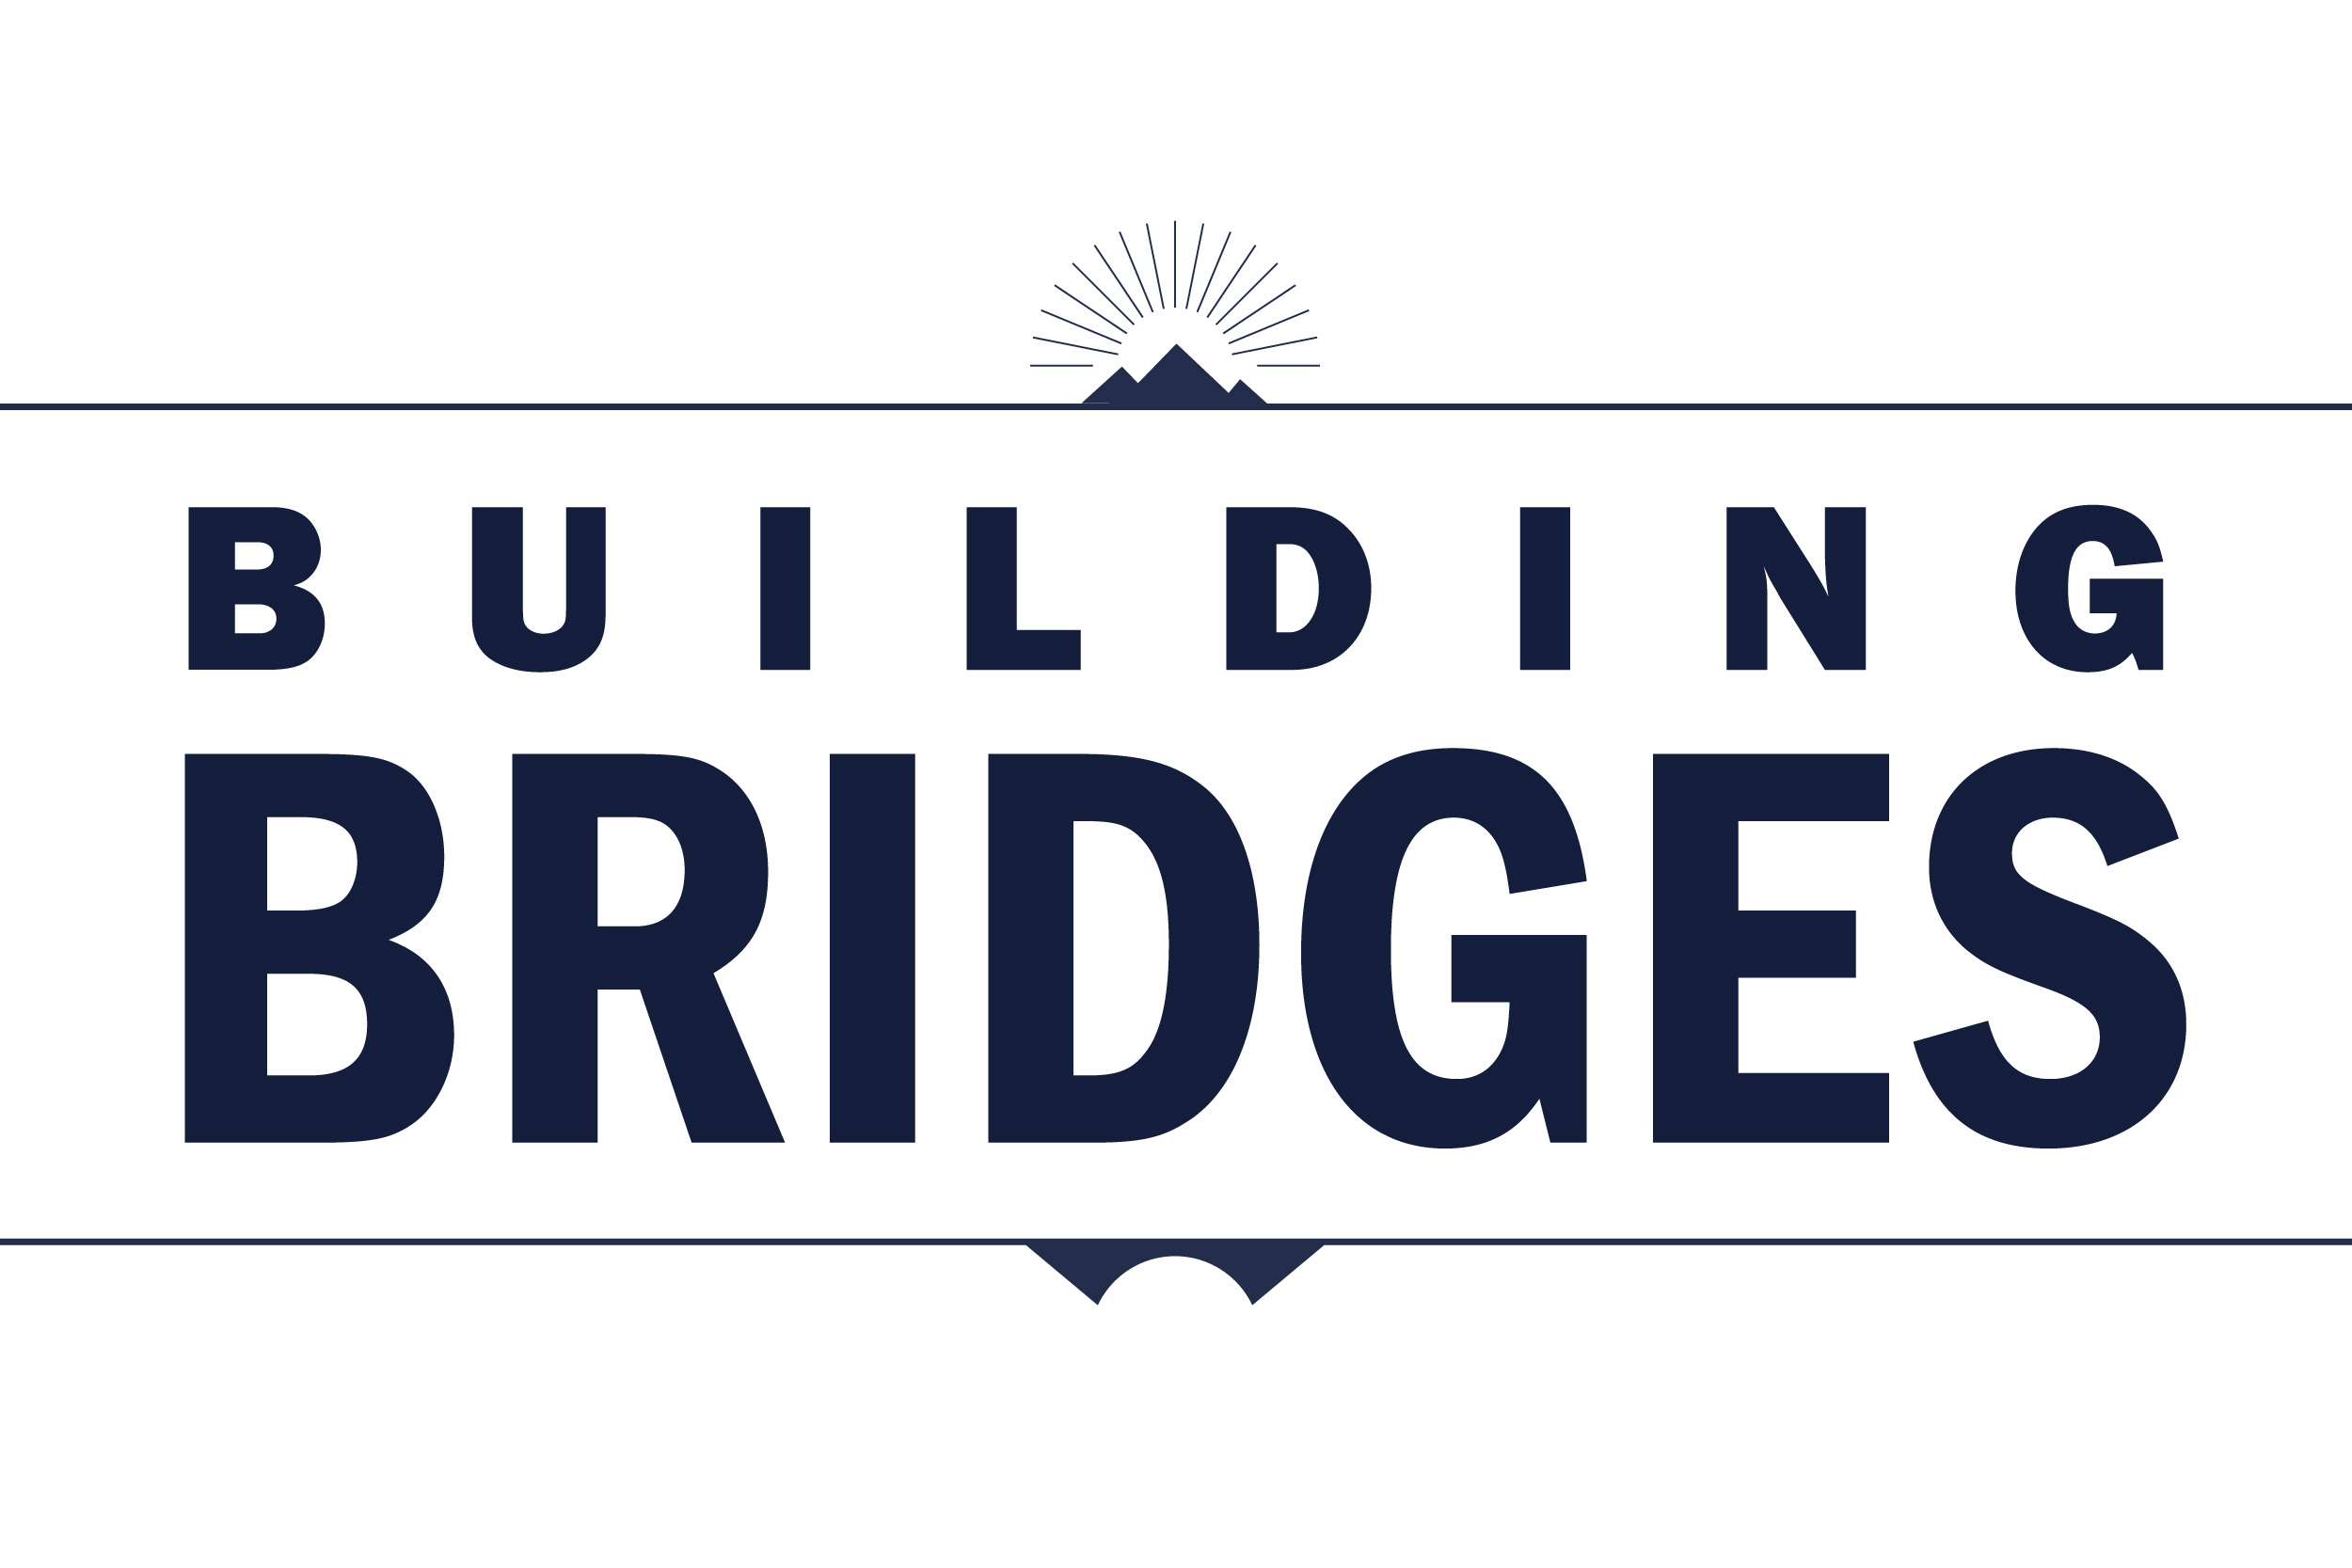 Building Bridges